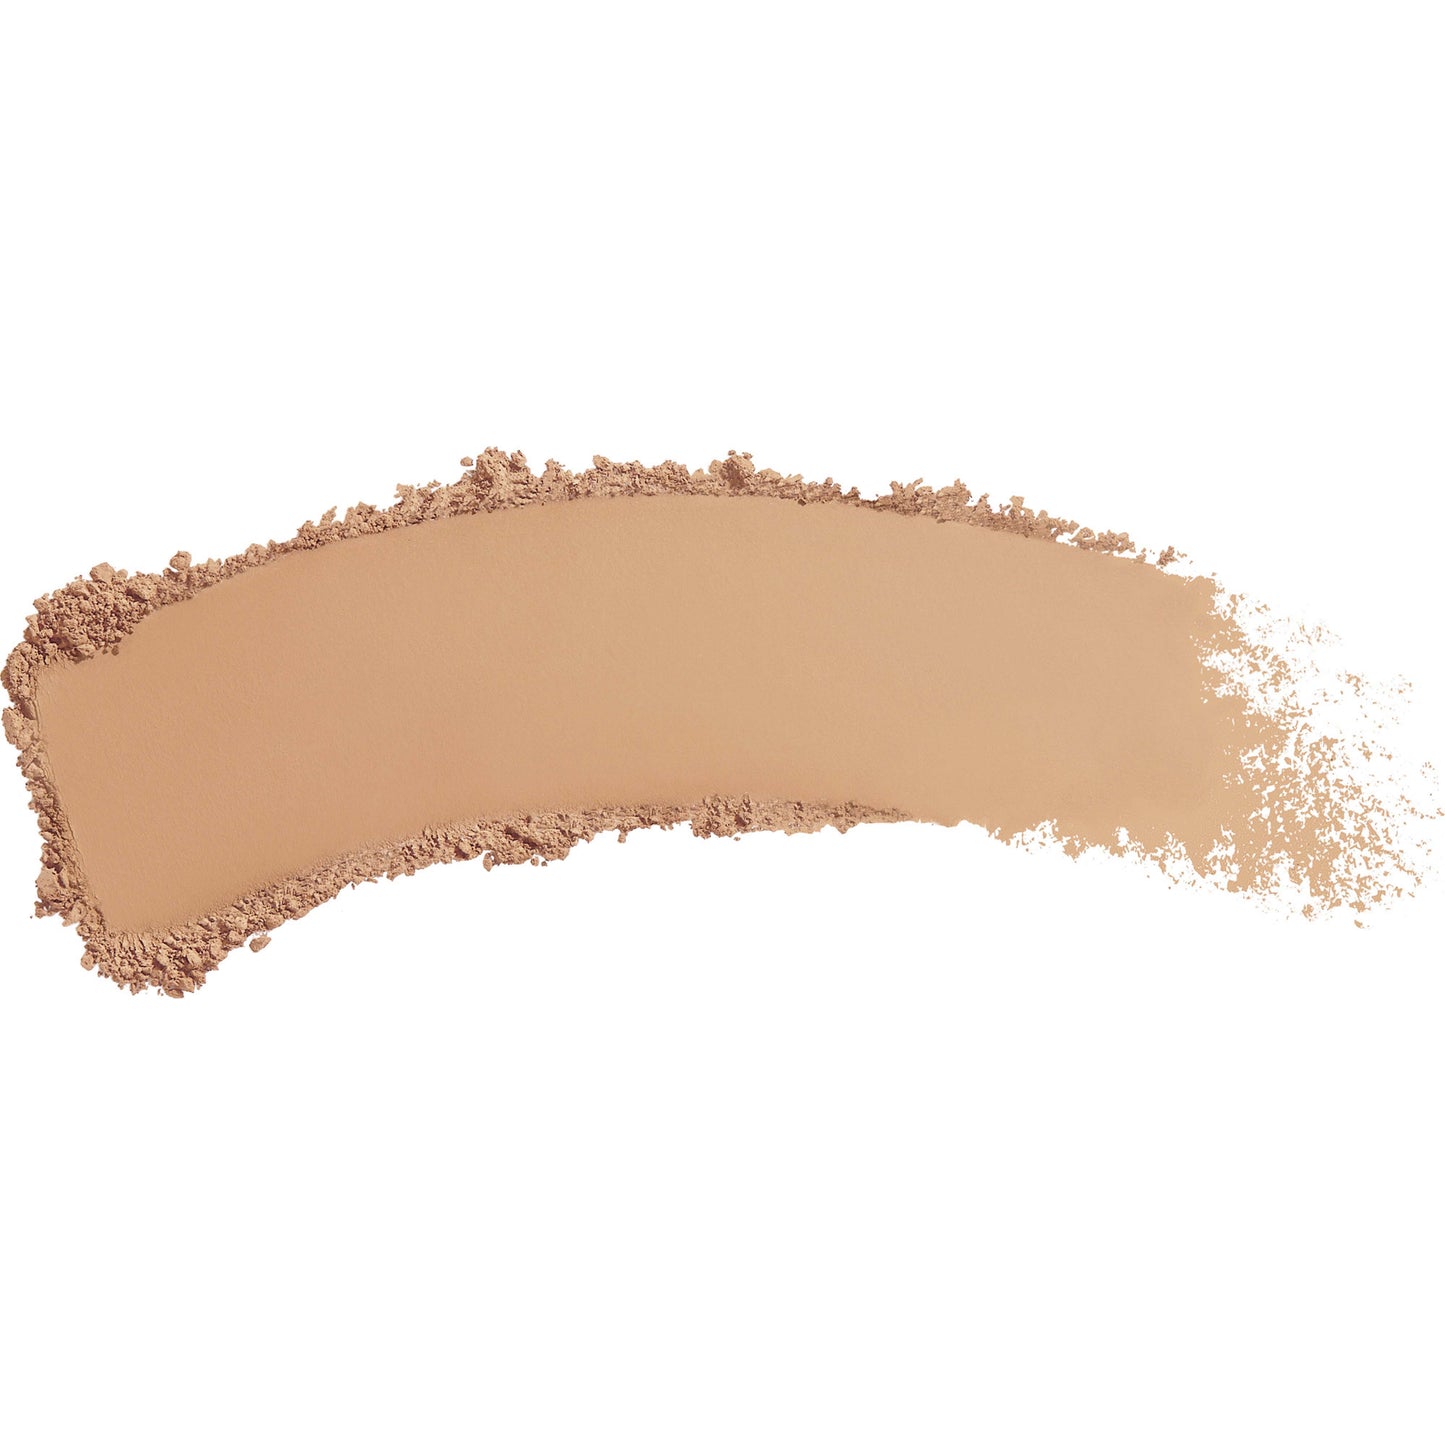 BarePro 16hr Skin-Perfecting Powder Foundation